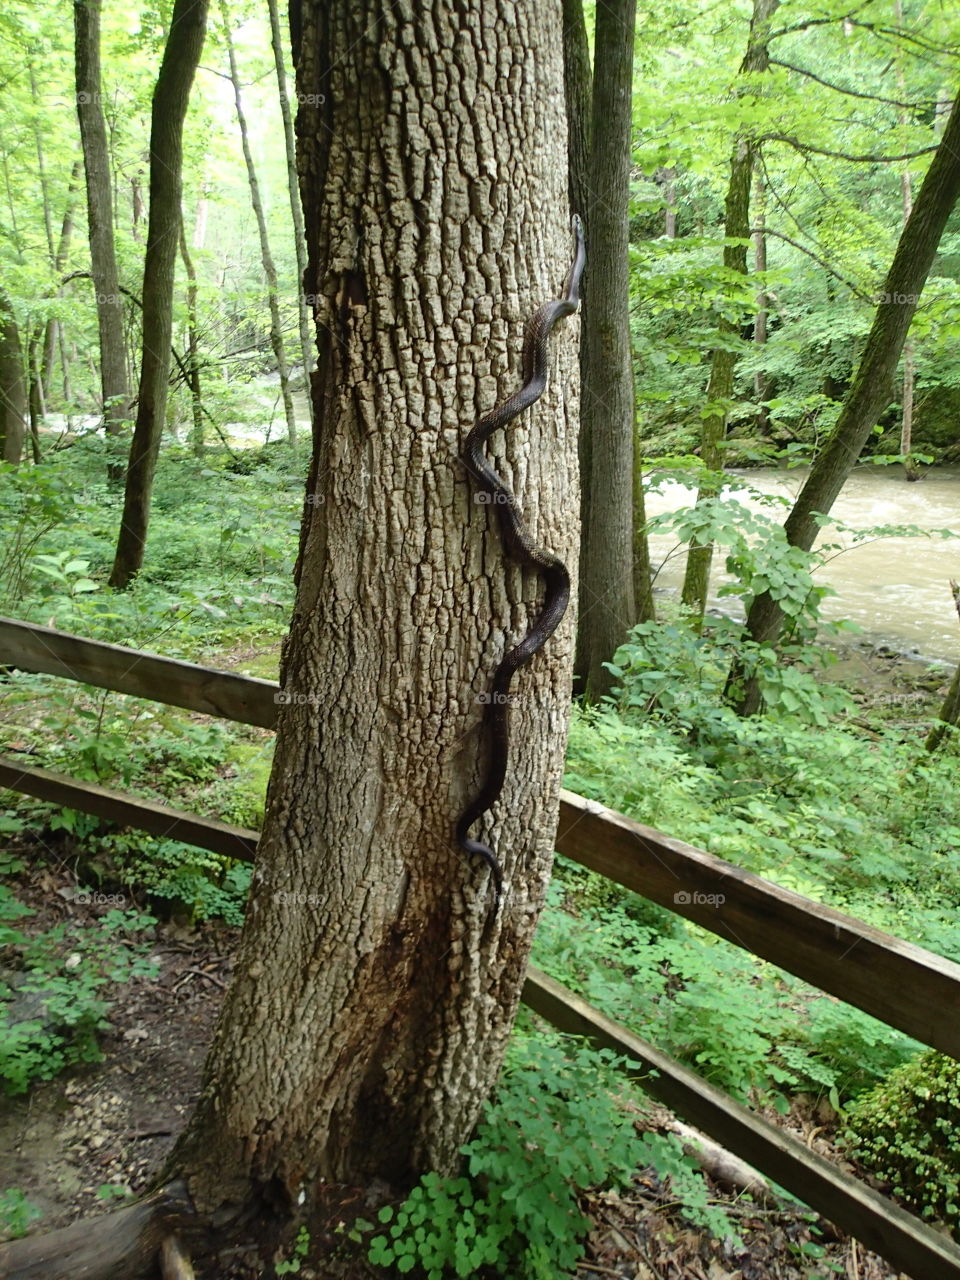 Large snake slithering up tree. 